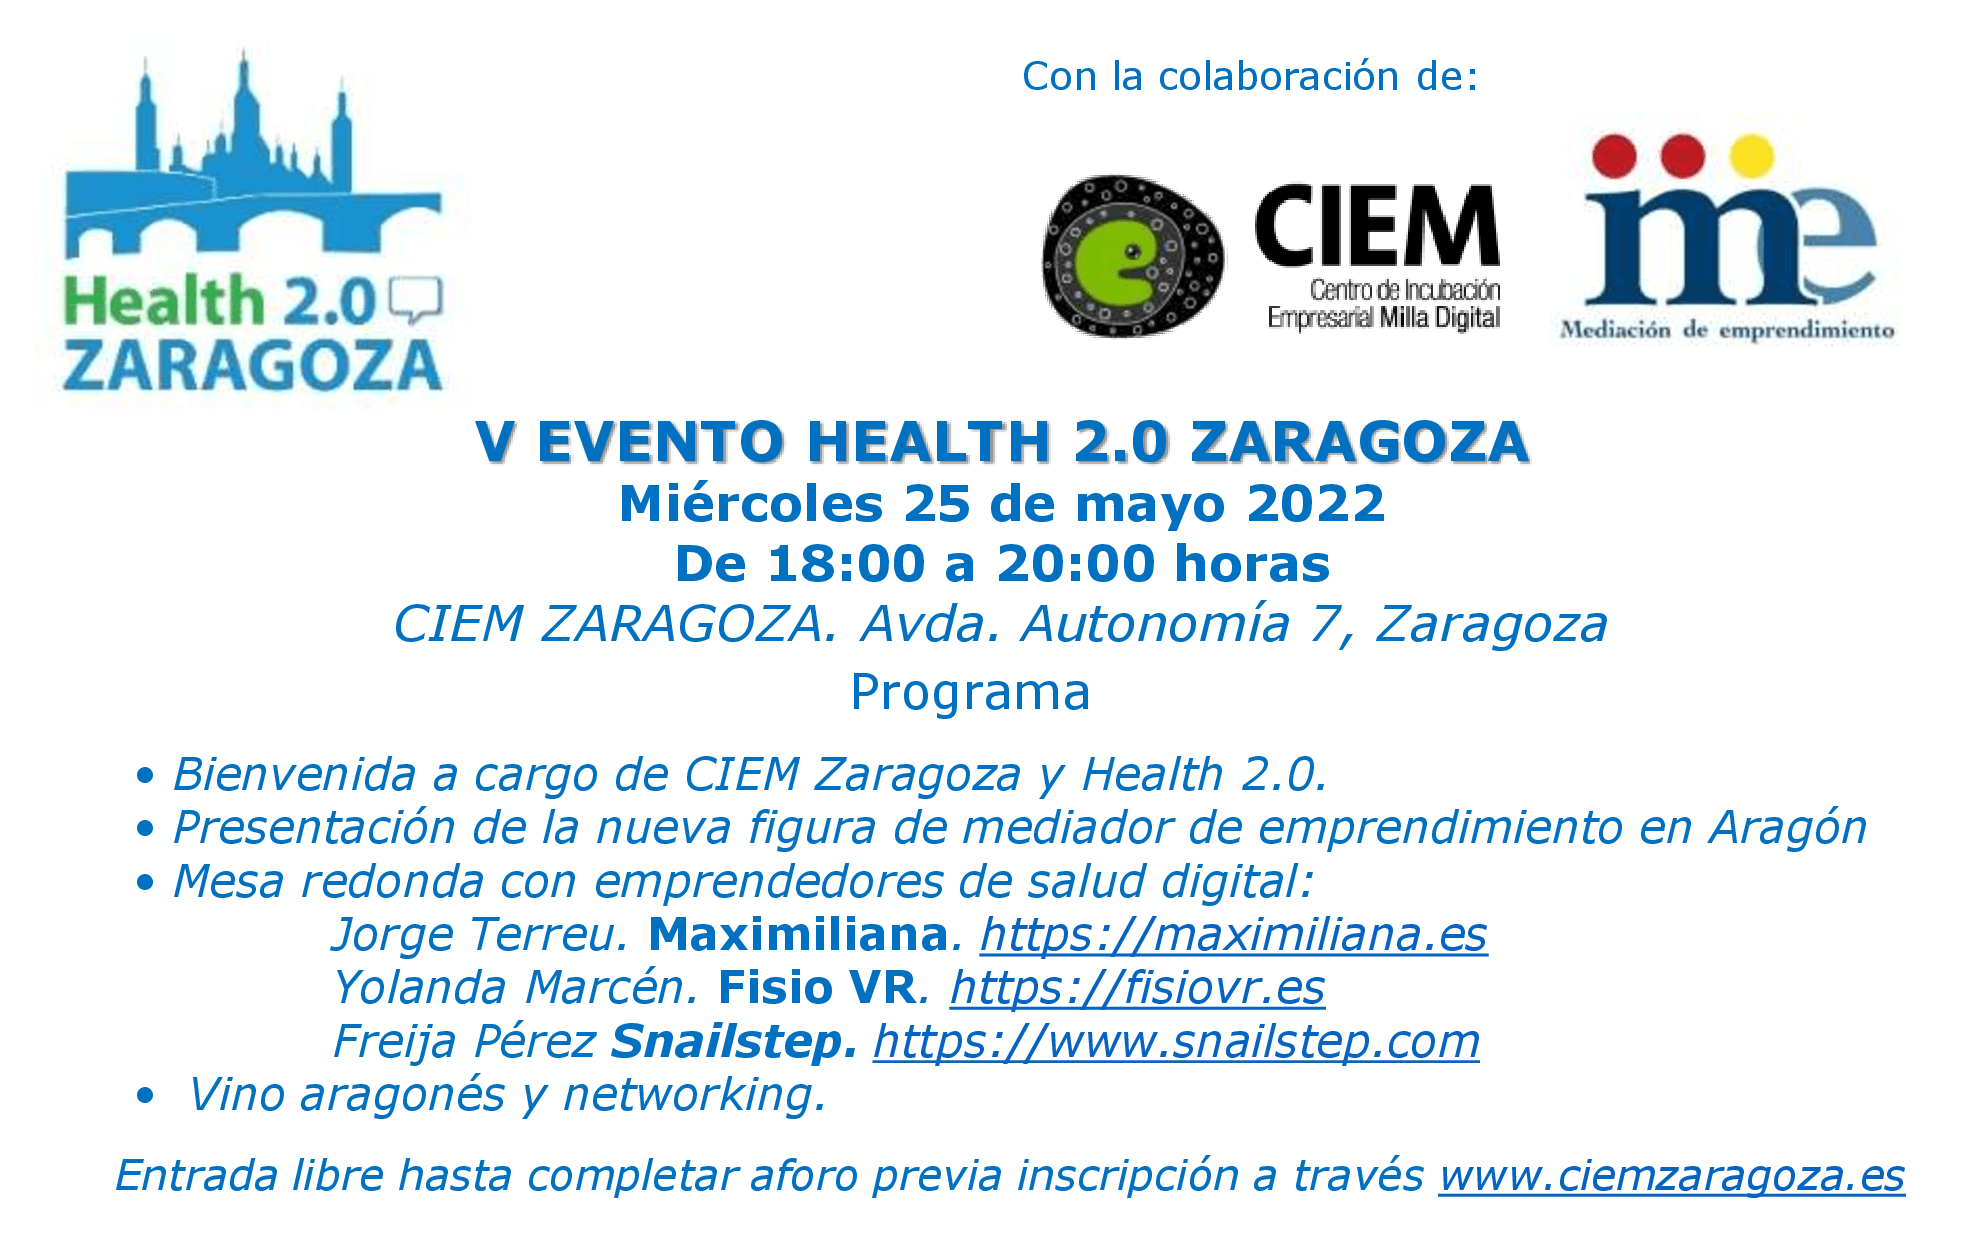 V EVENTO HEALTH 2.0 ZARAGOZA